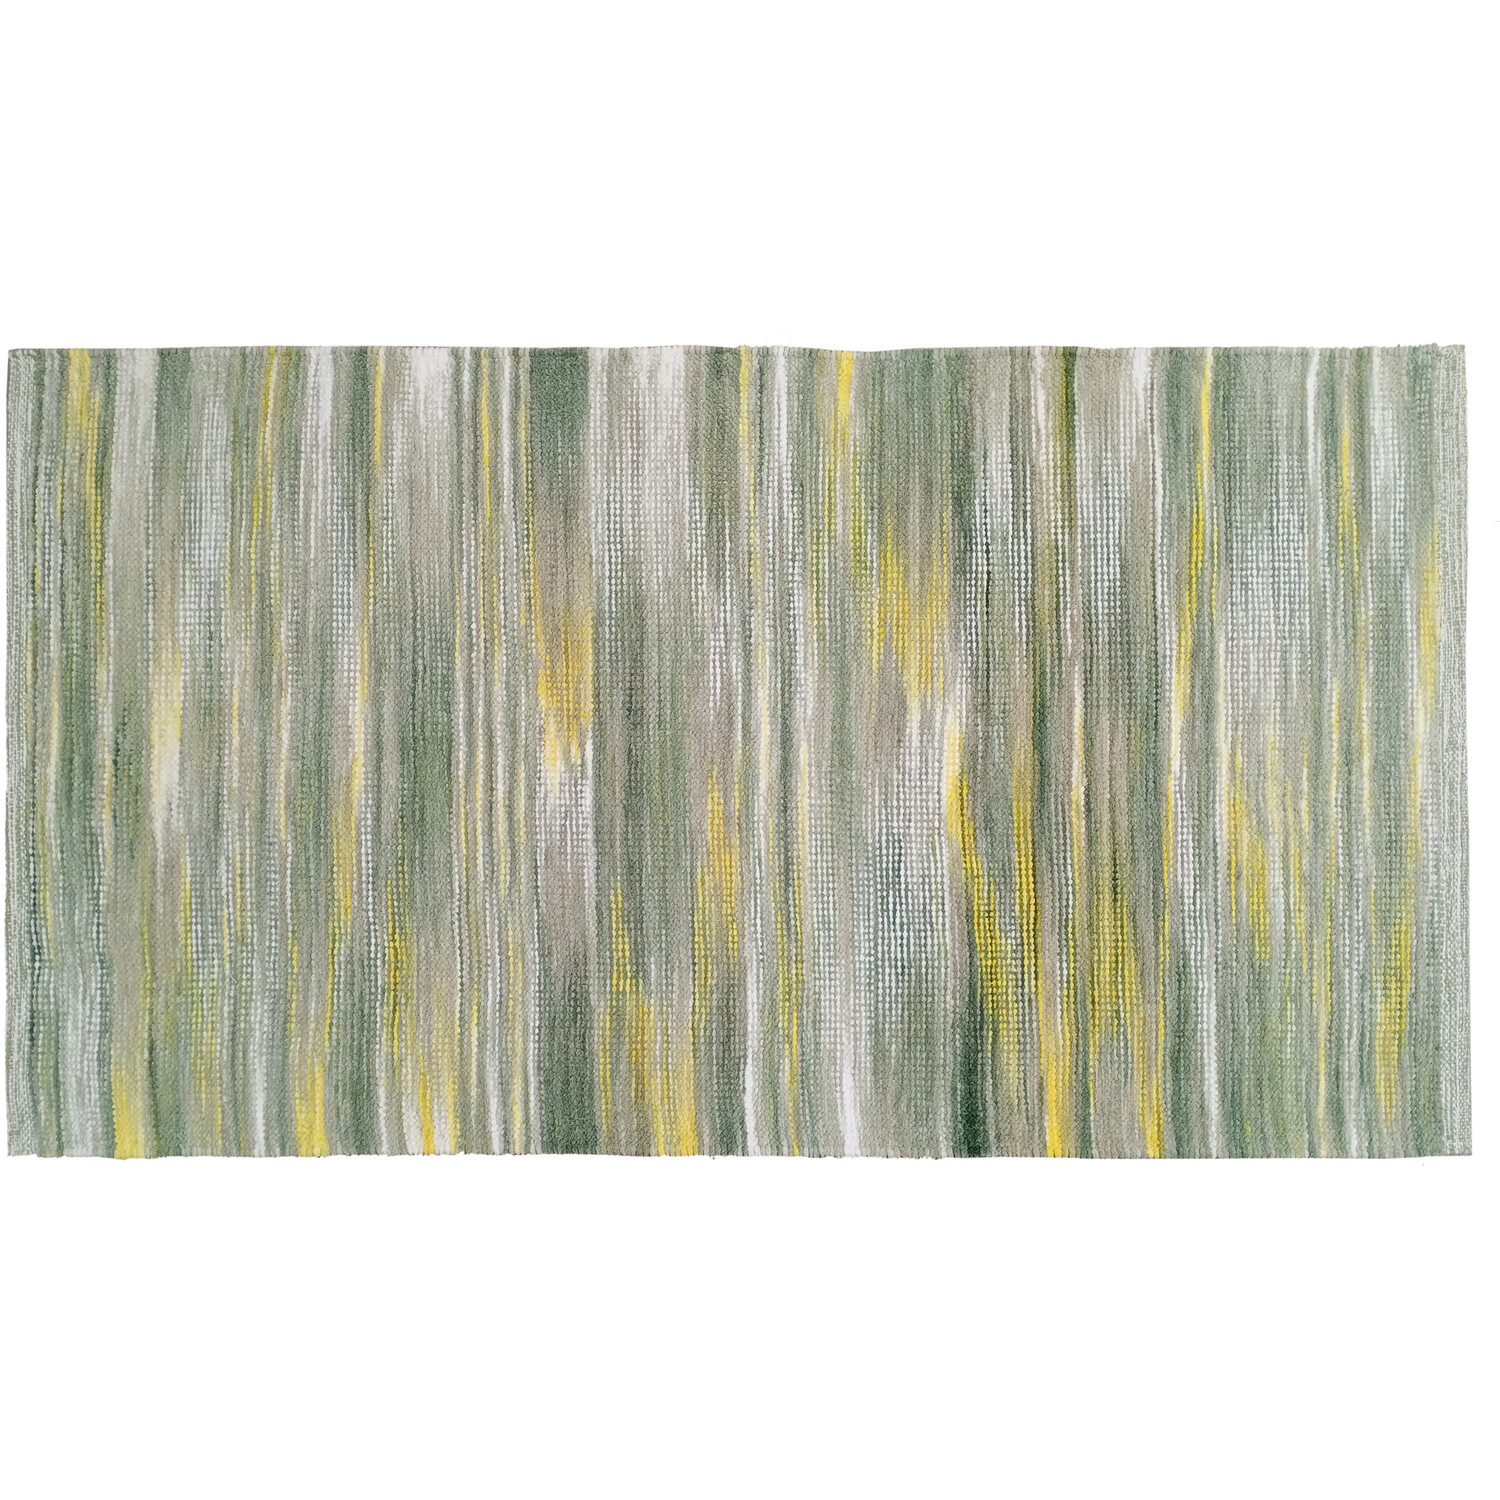 Sara Green and Yellow Stripe Rug 120 x 70cm Image